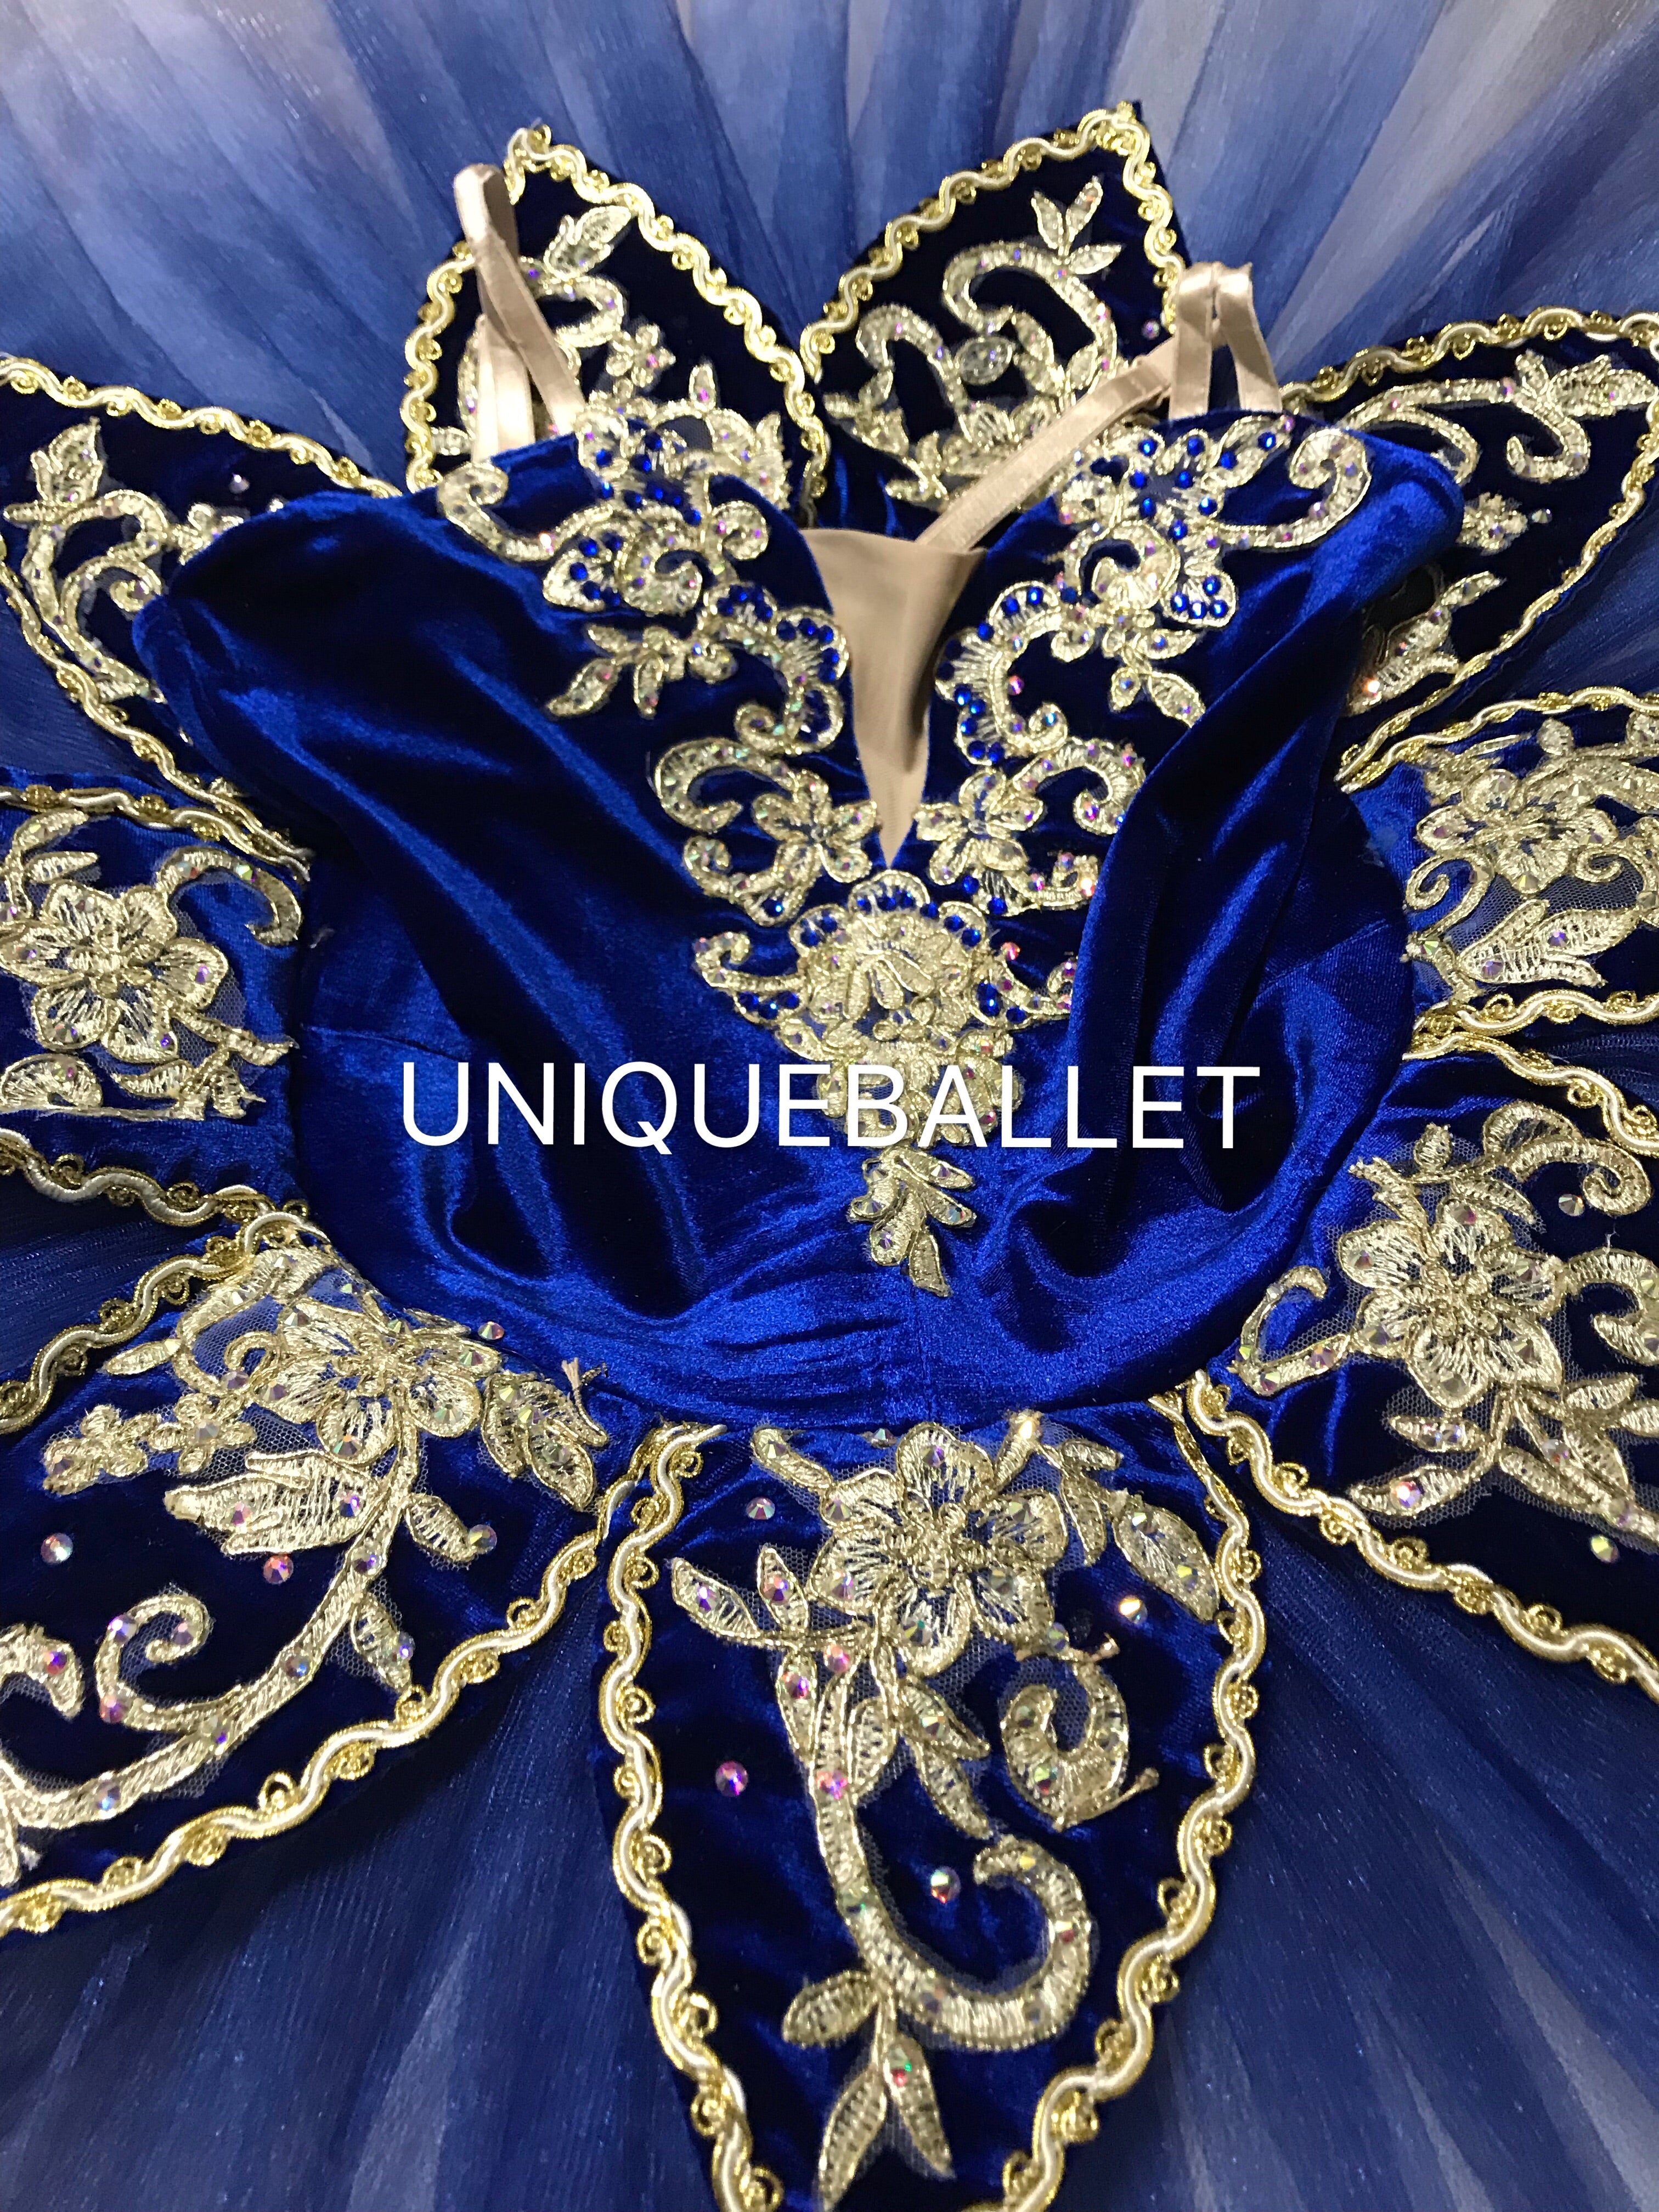 Cost-Effective Professional Princess Florine Blue Bird Gradient Classic Ballet Costume Stage Platter Tutu